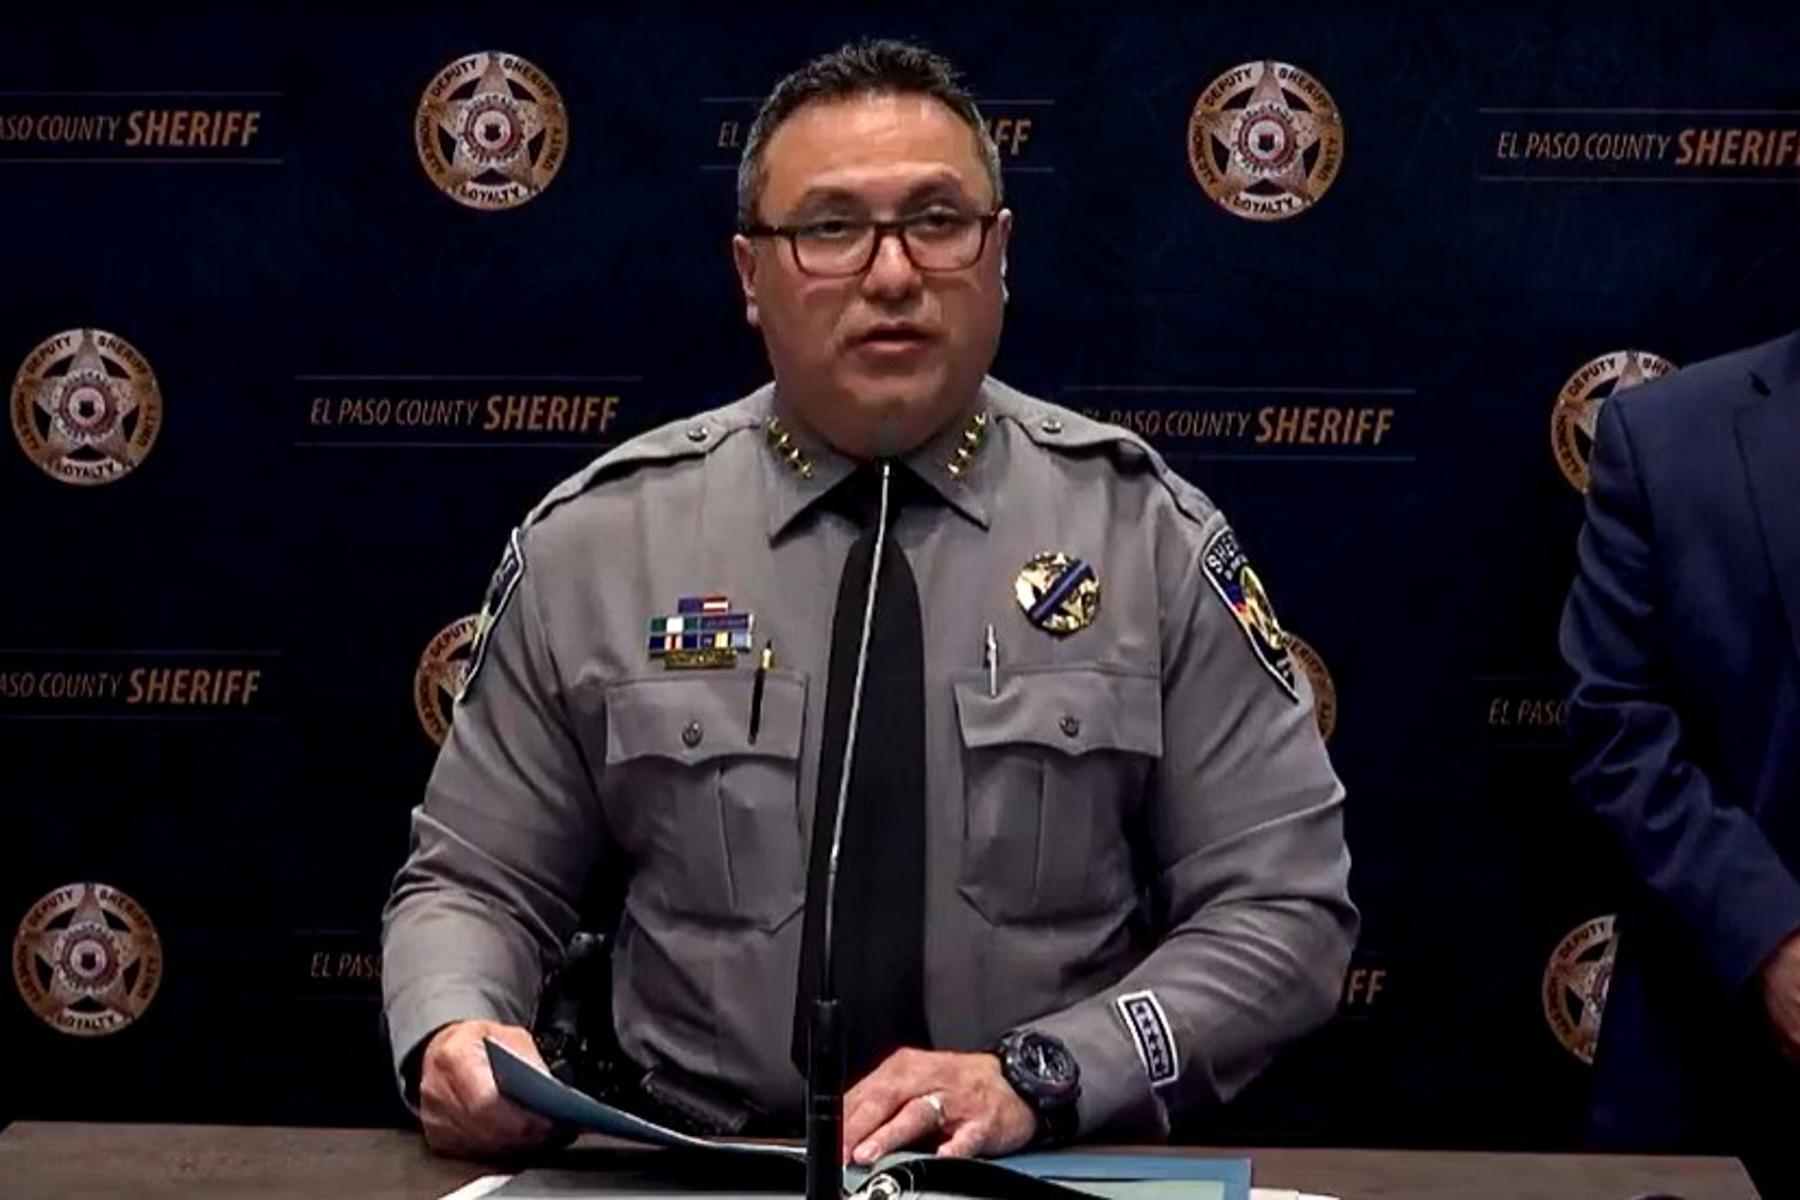 El Paso County Sheriff Joseph Roybal